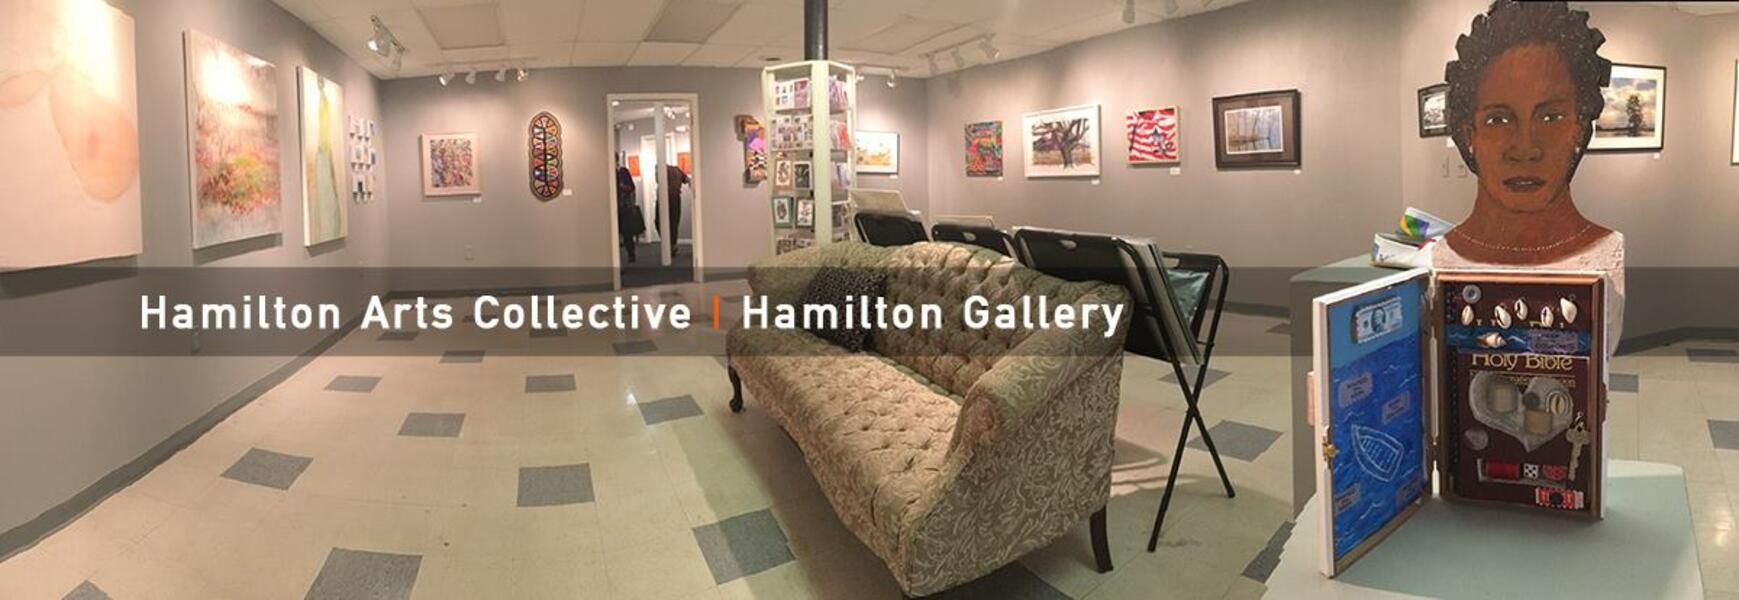 Hamilton Arts Collective | Hamilton Gallery